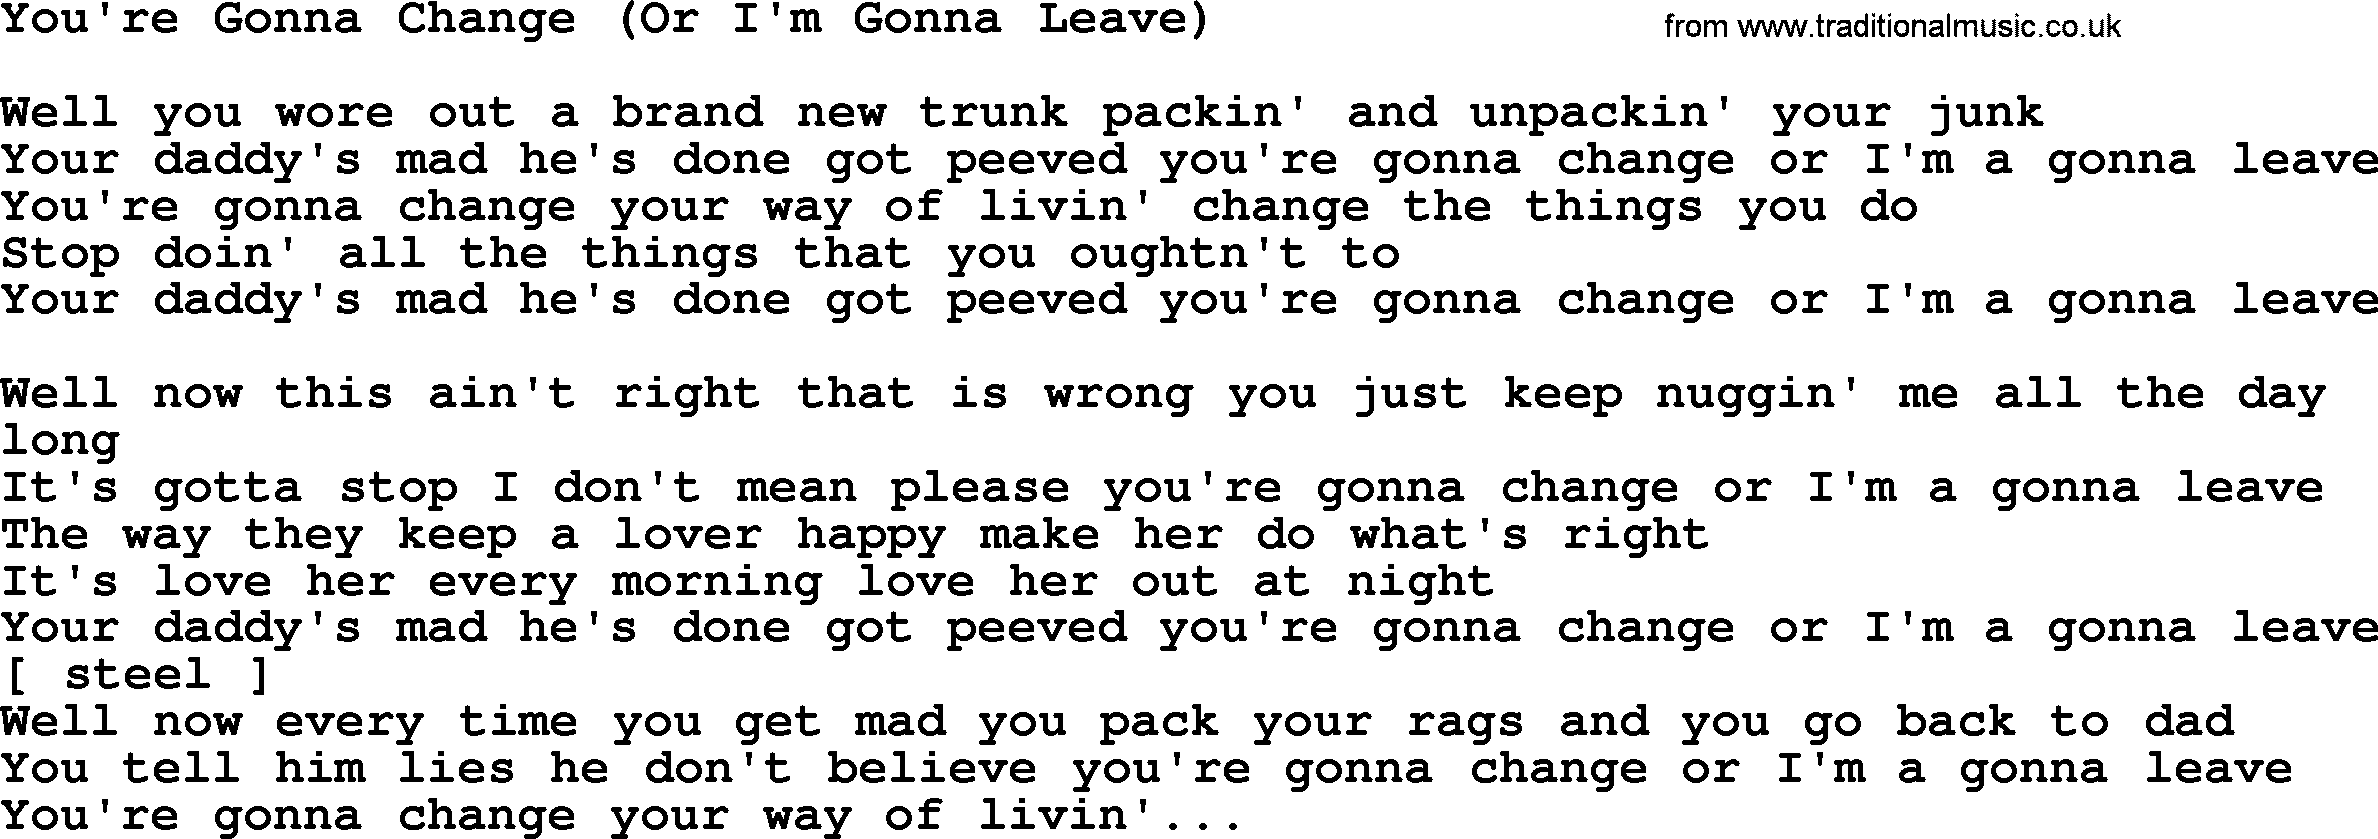 George Jones song: You're Gonna Change (or I'm Gonna Leave), lyrics